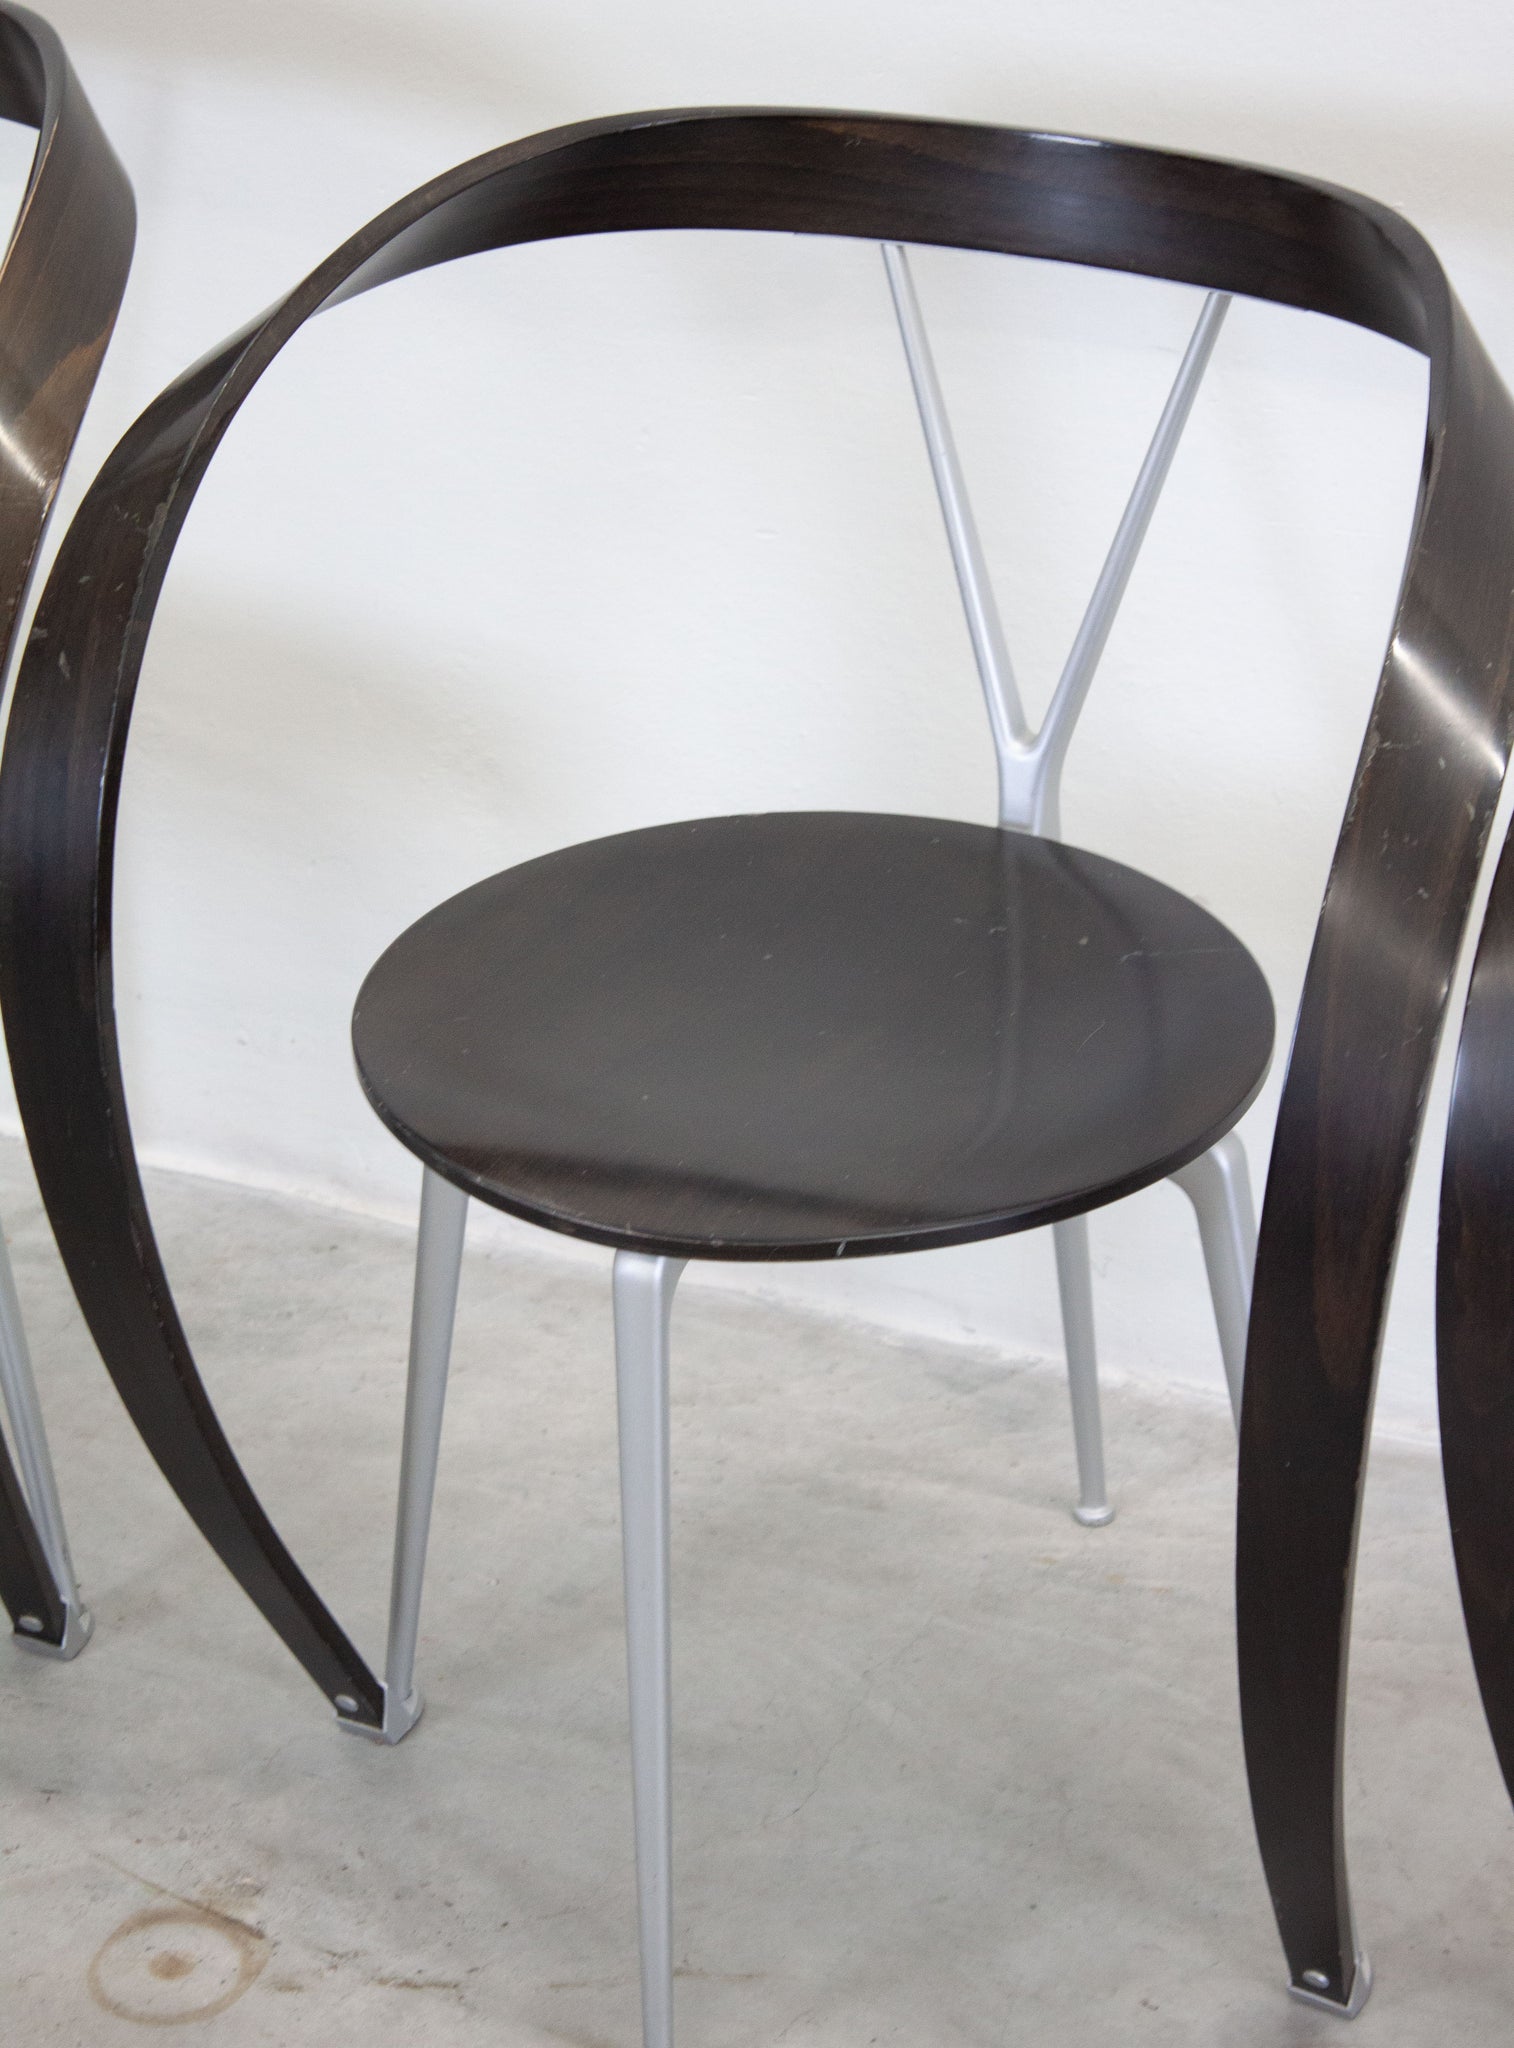 Cassina Revers Chairs by Andrea Branzi (Black)